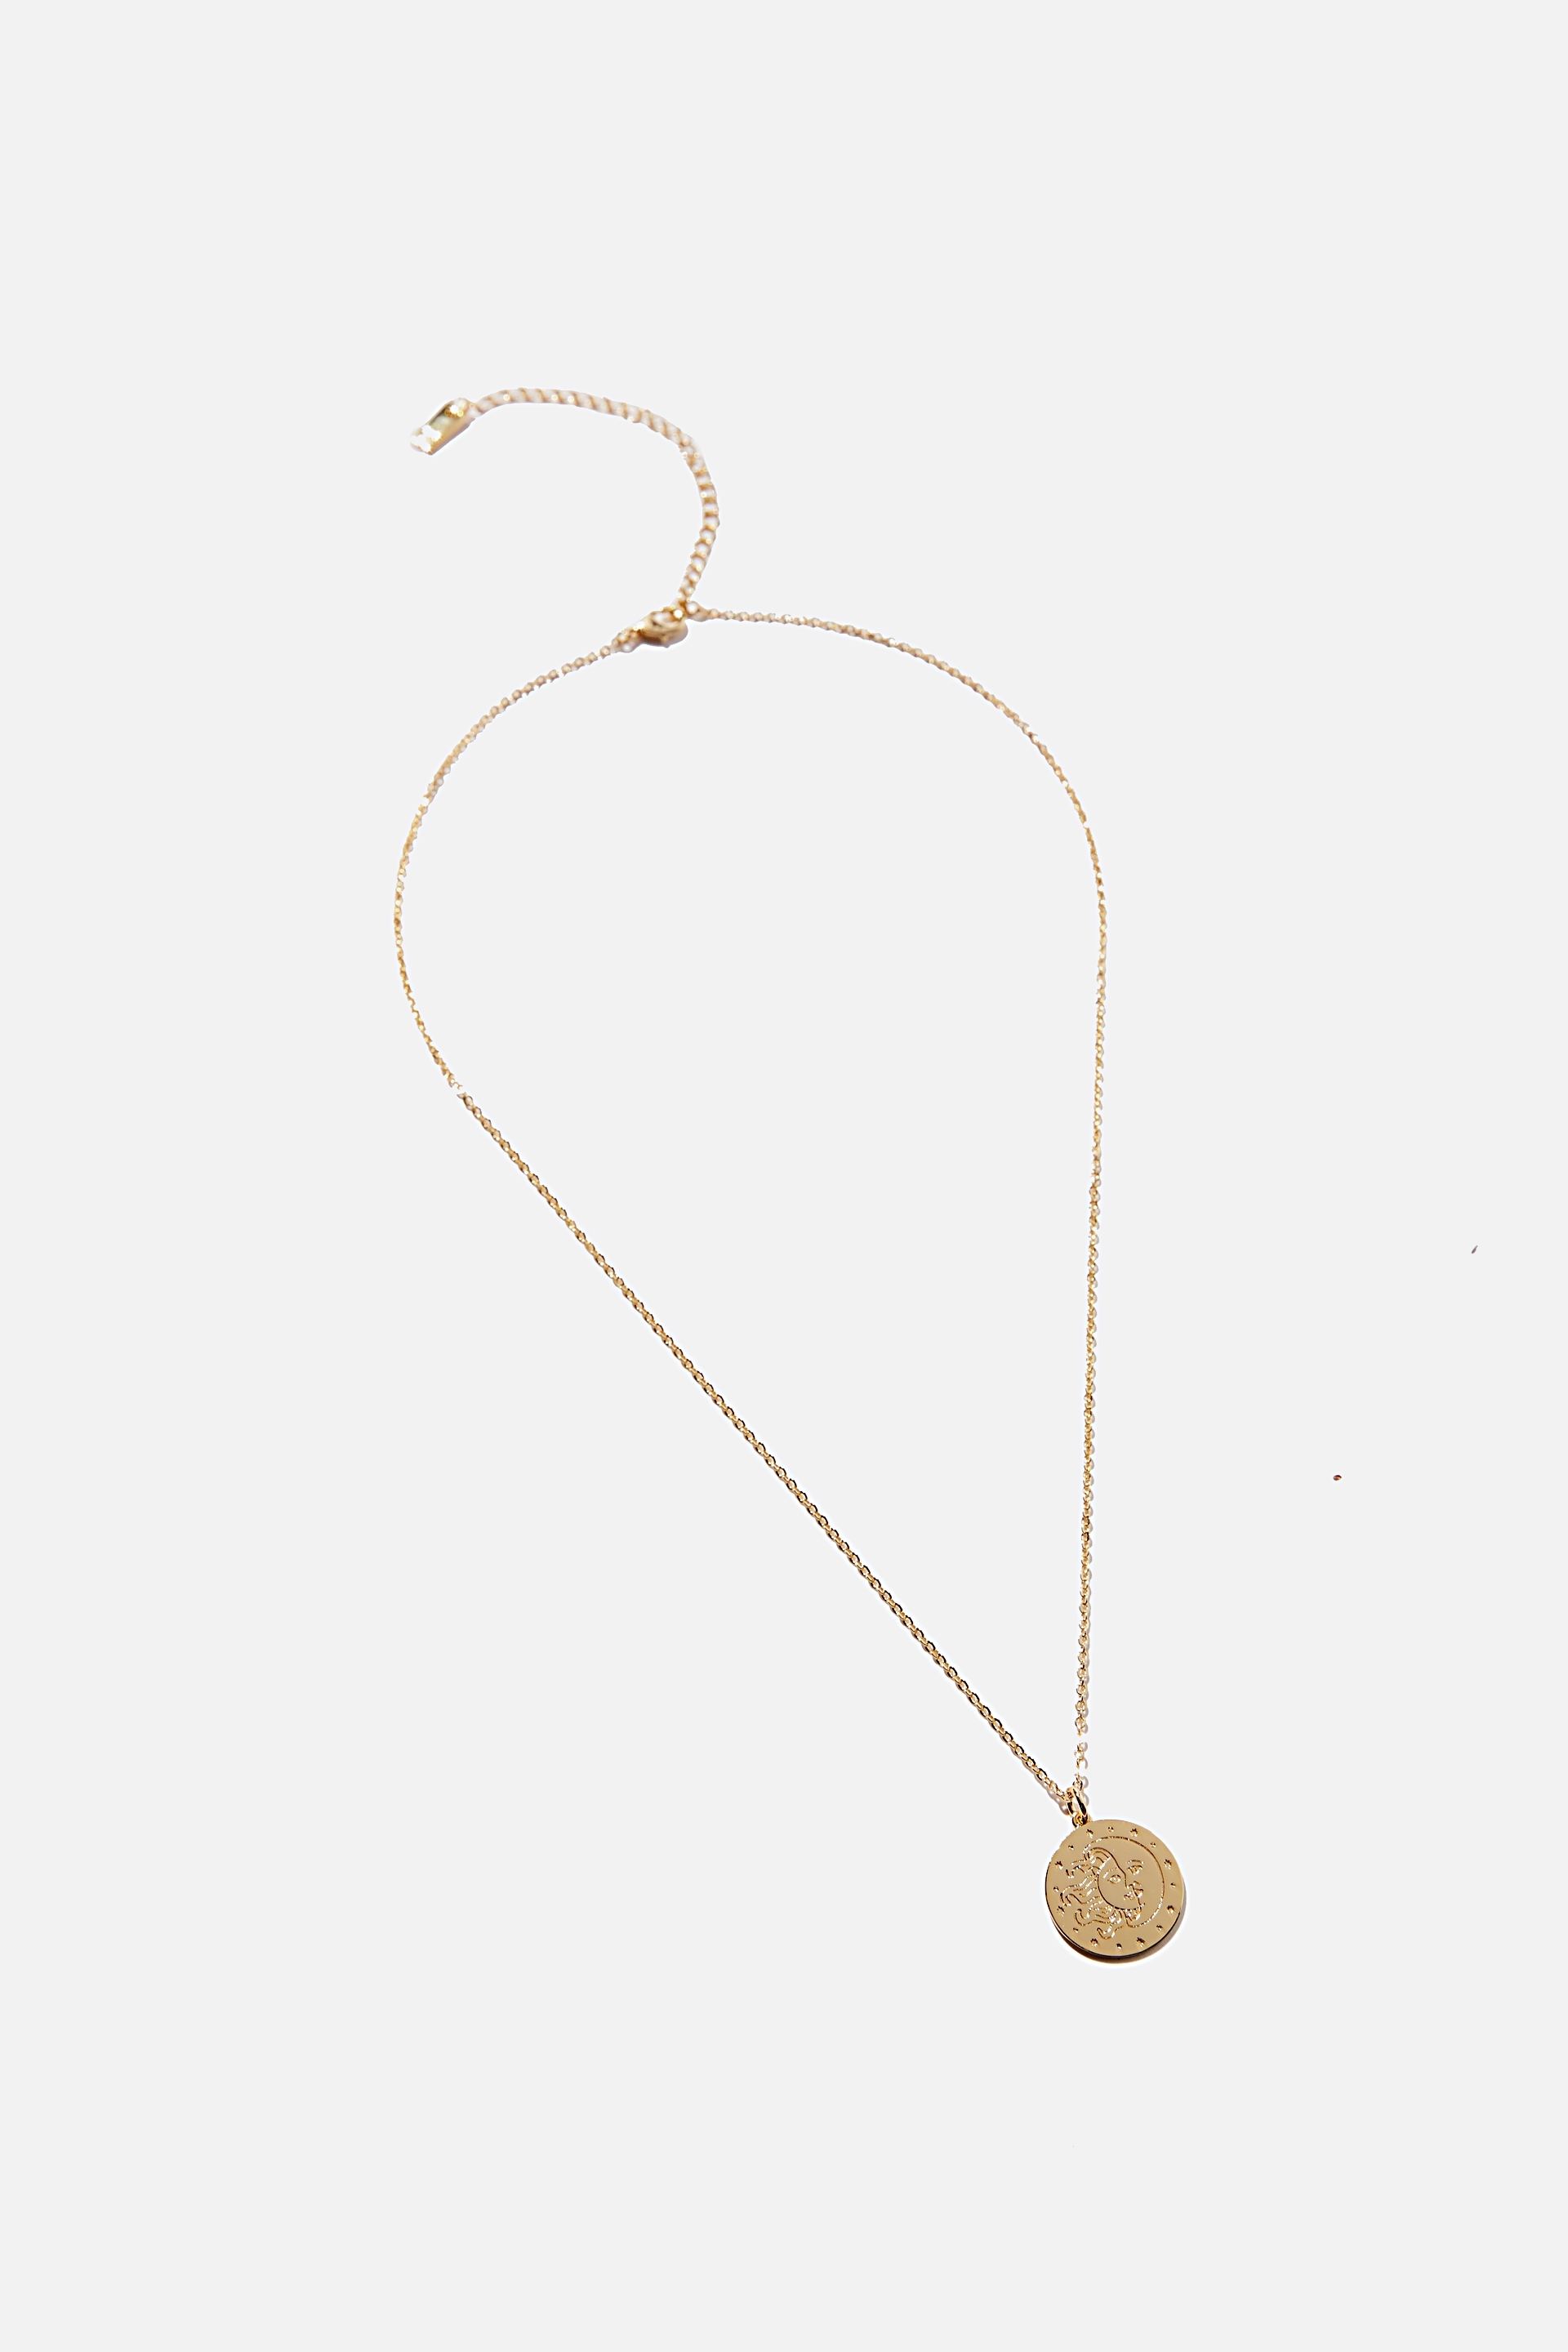 Rubi - Premium Pendant Necklace - Gold plated sun & moon face